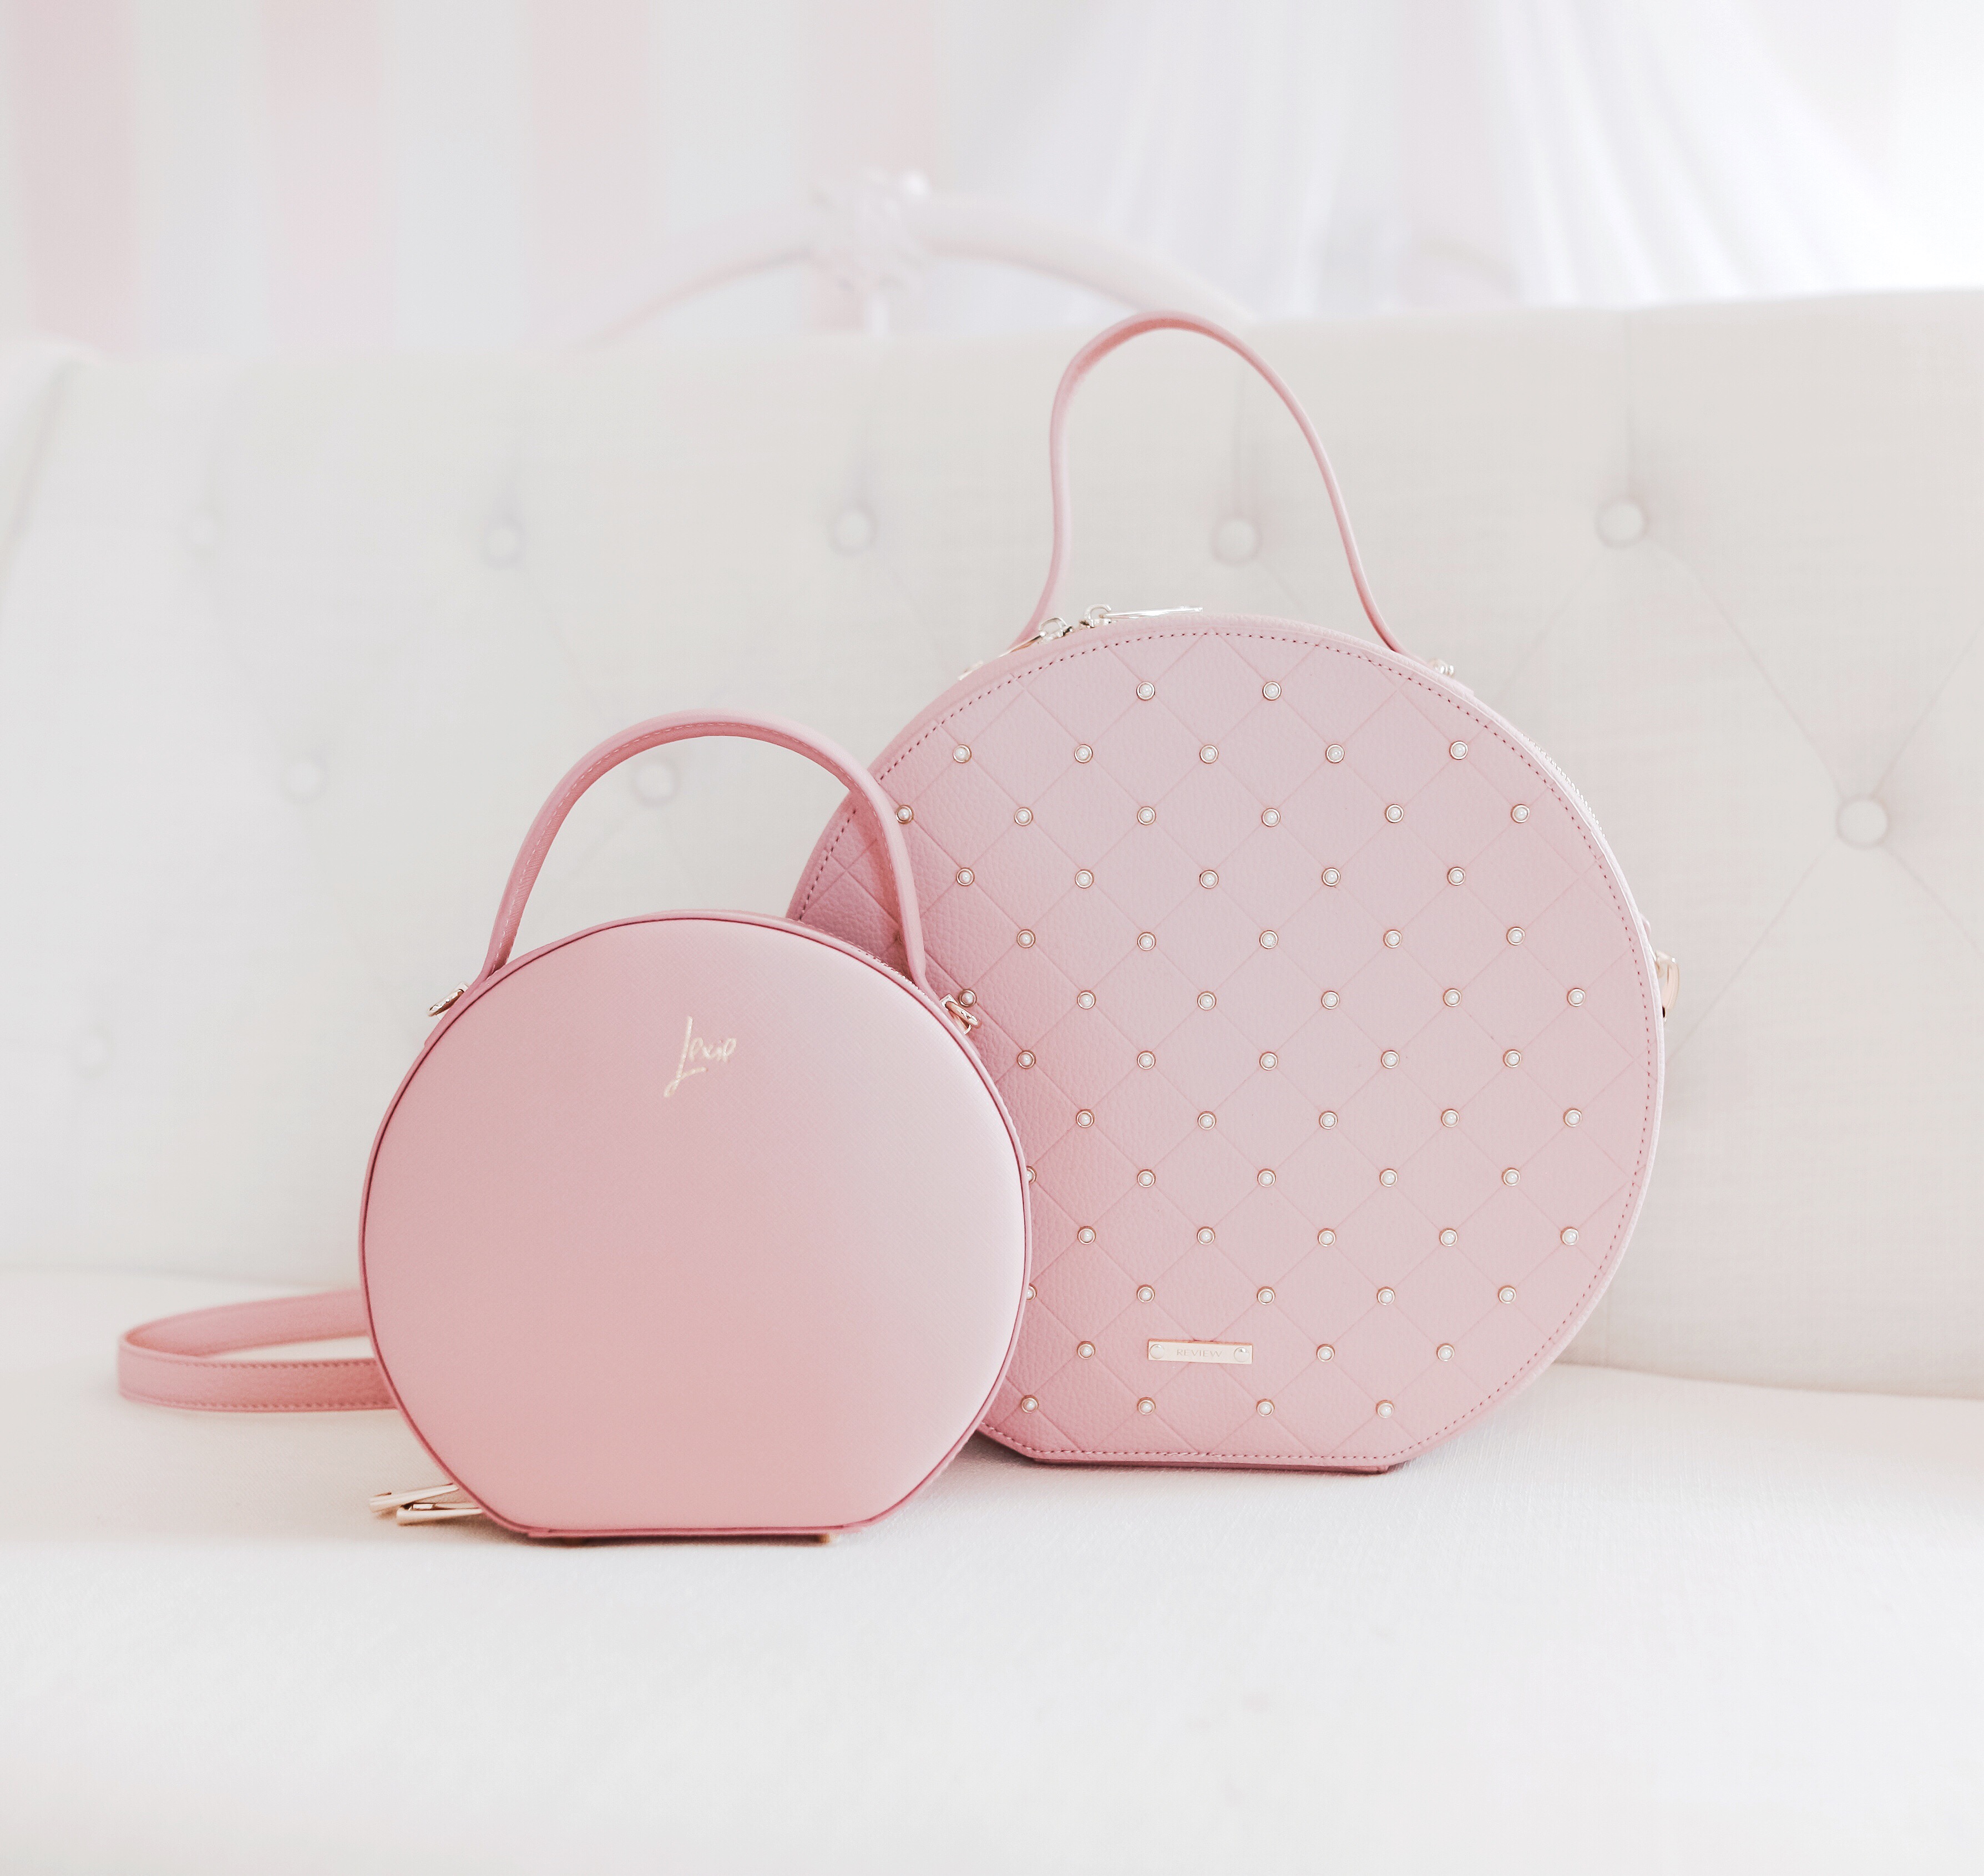 Handbags For Spring That Are Oh So Feminine & Cute